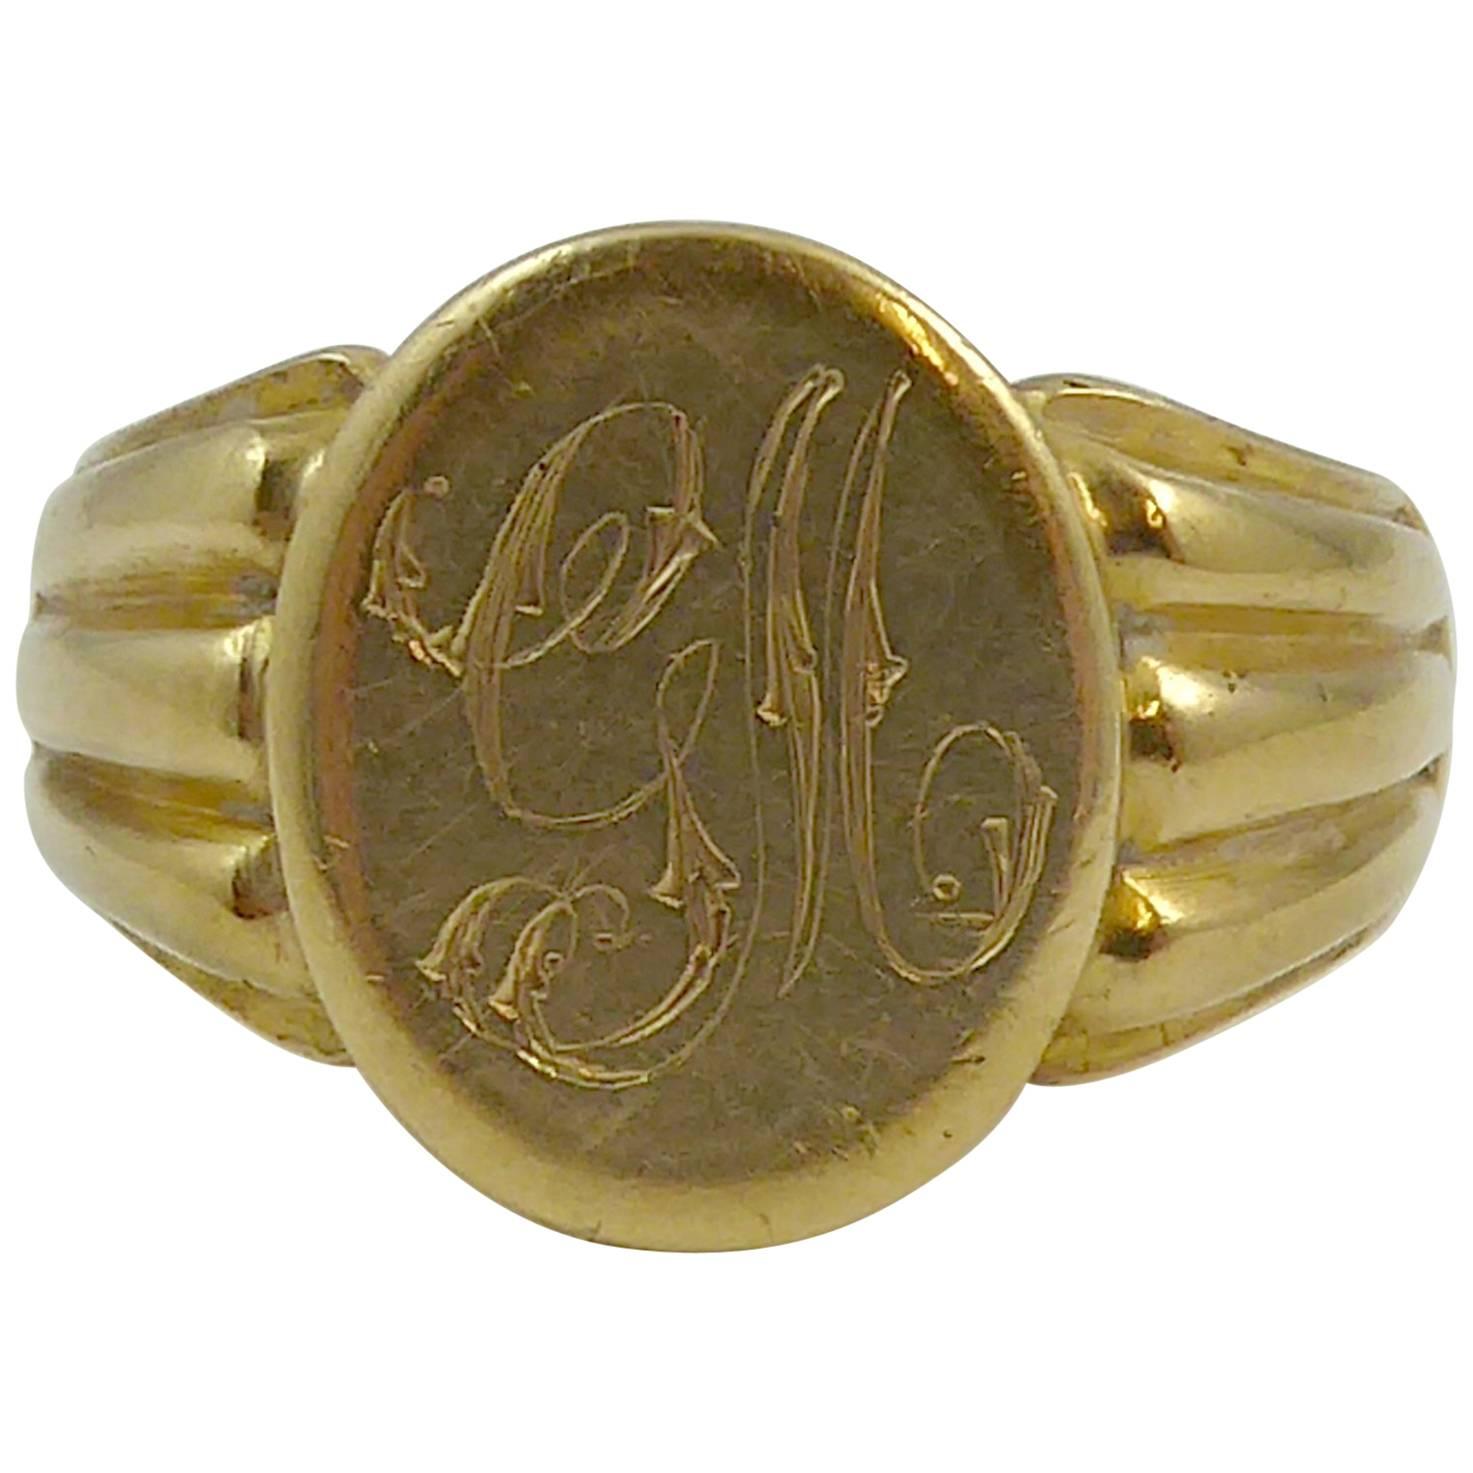 Edwardian Antique Gold Gents Signet Ring, Hallmarked London 1911, 18 Carat Gold